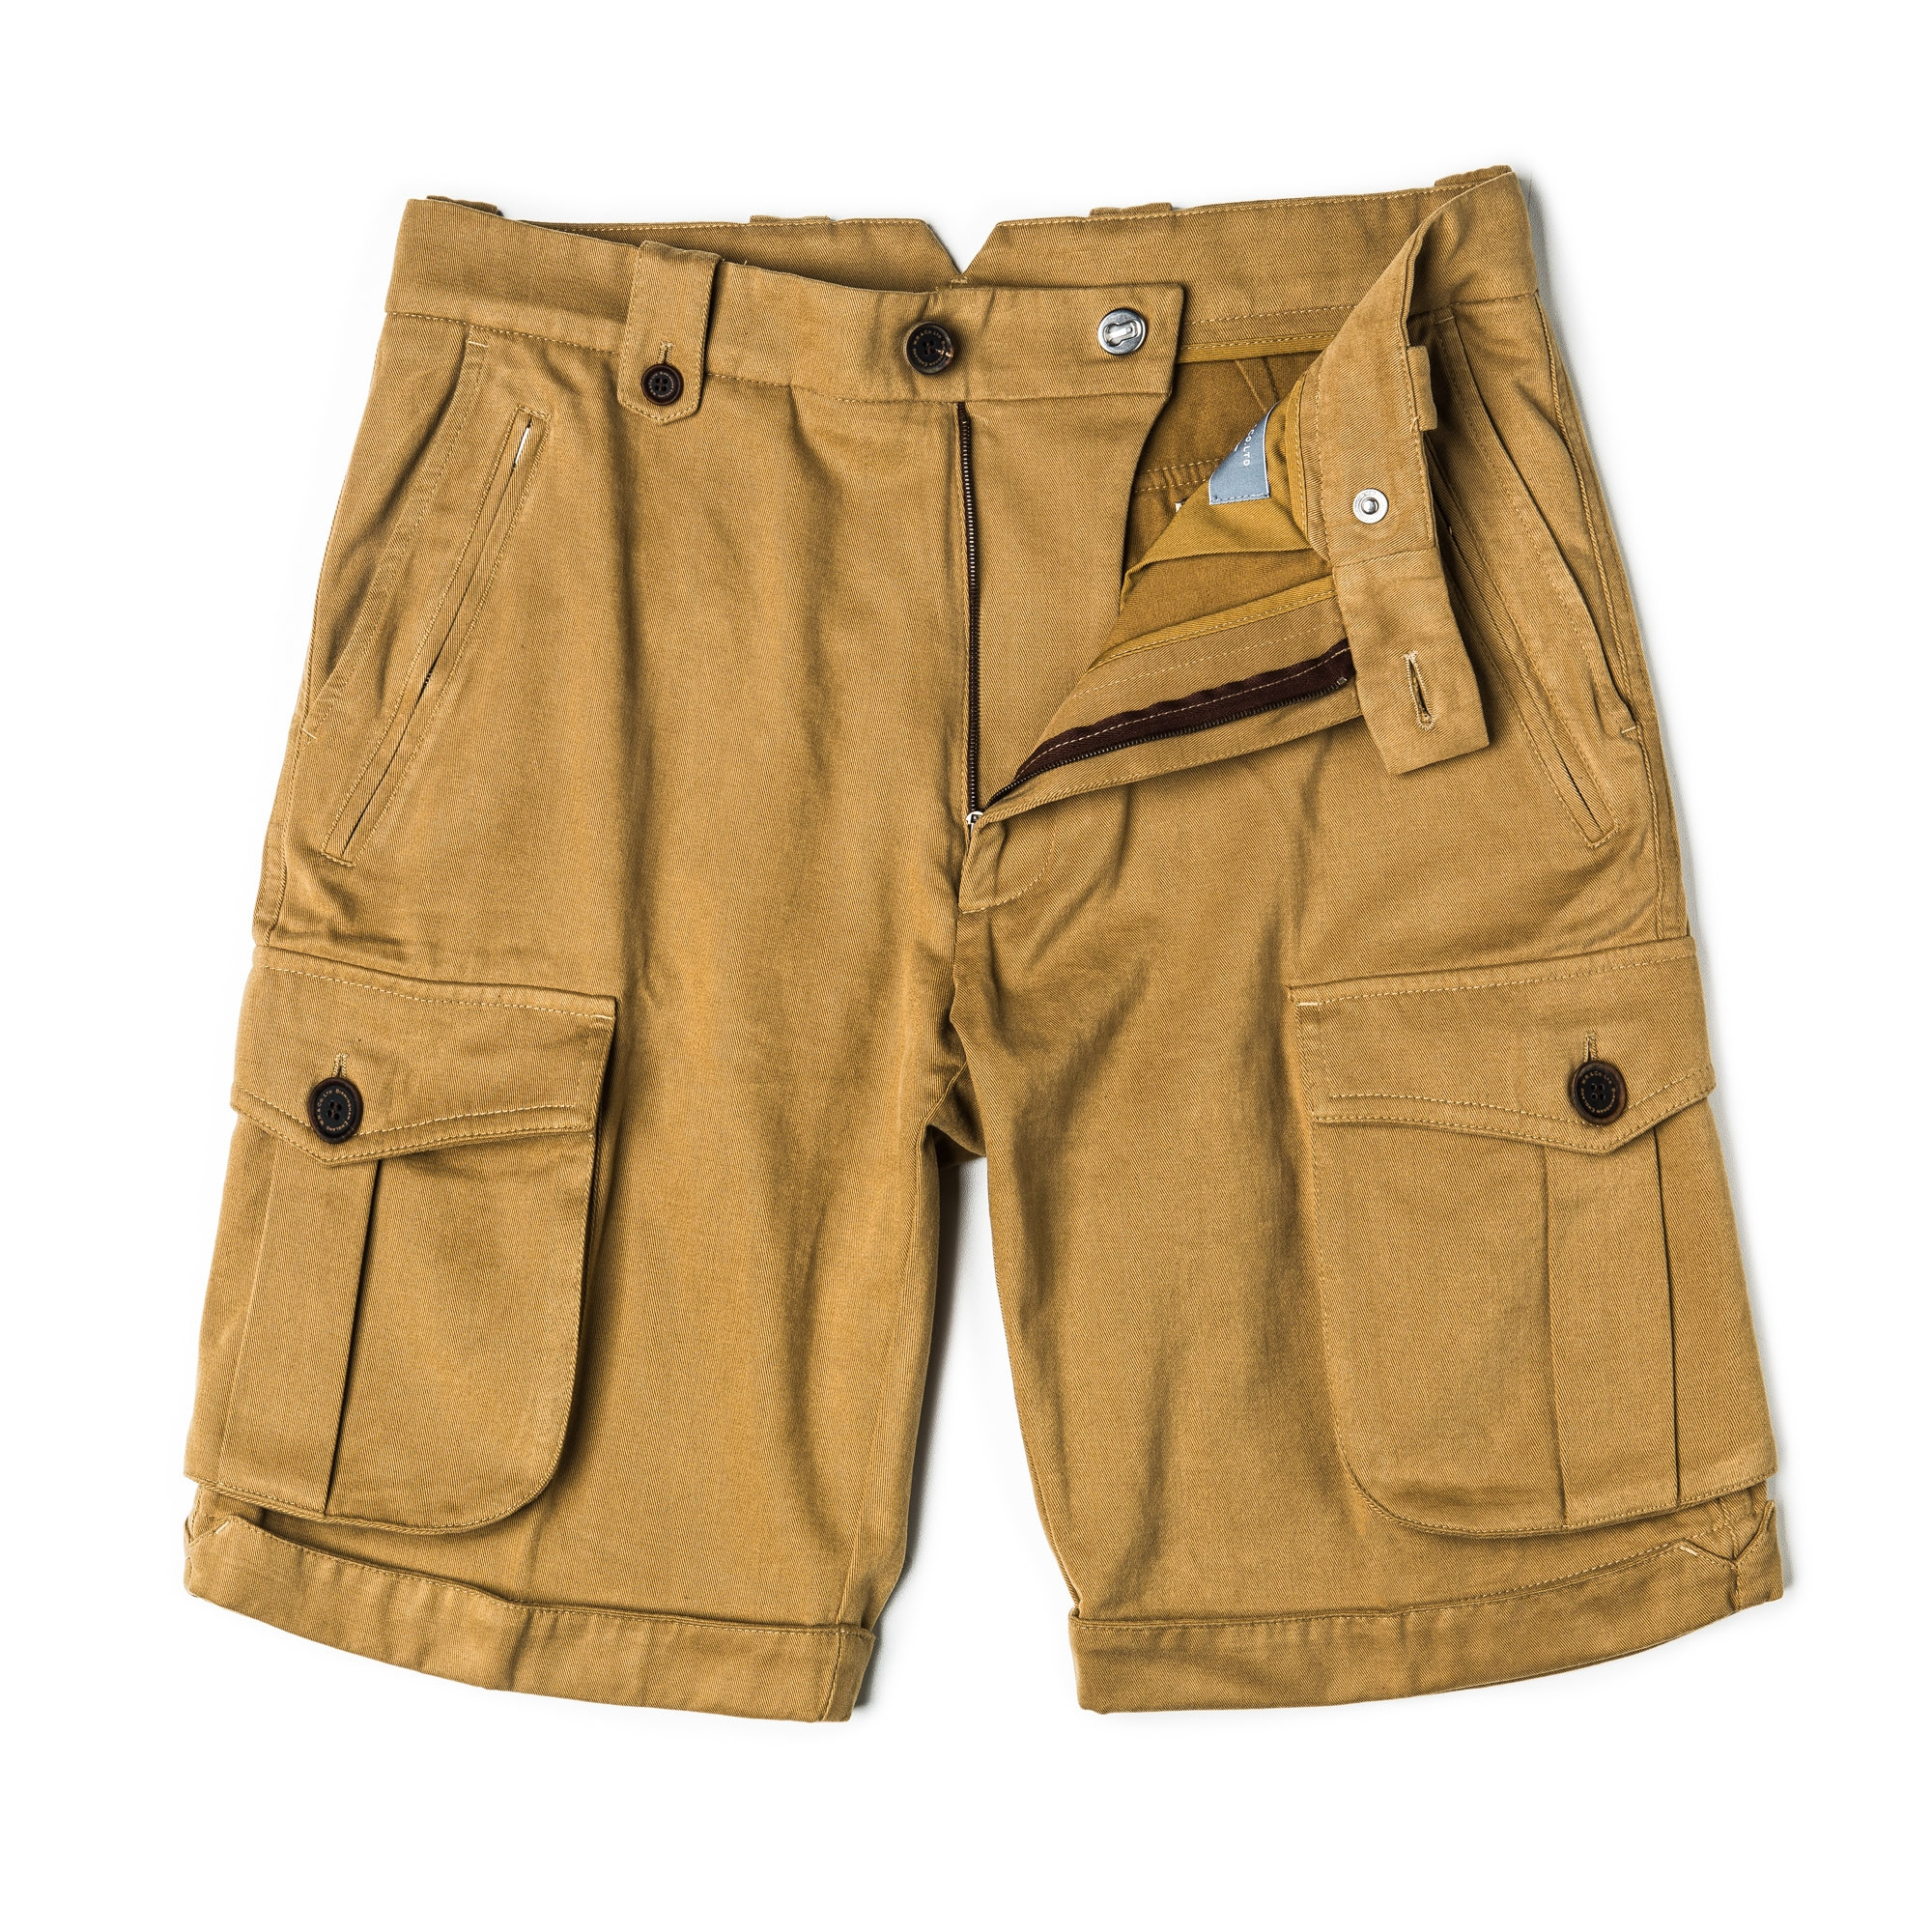 Westley Richards Safari Shorts in Brushed Beige